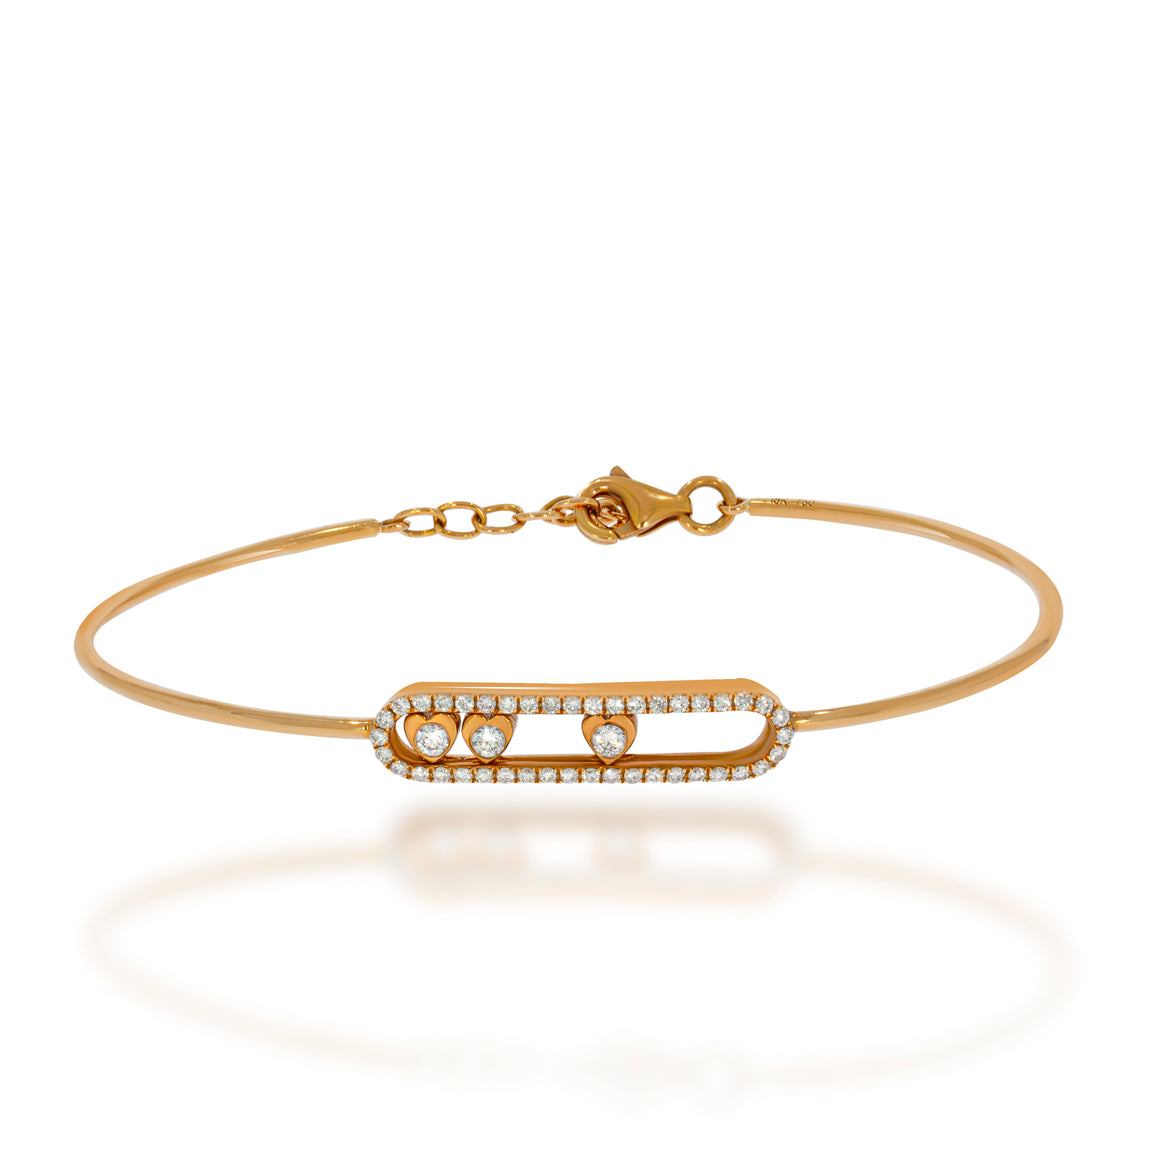 18k rose gold bangle bracelet with an open disc studded with diamonds and inside 3 hearts bazel diamonds.